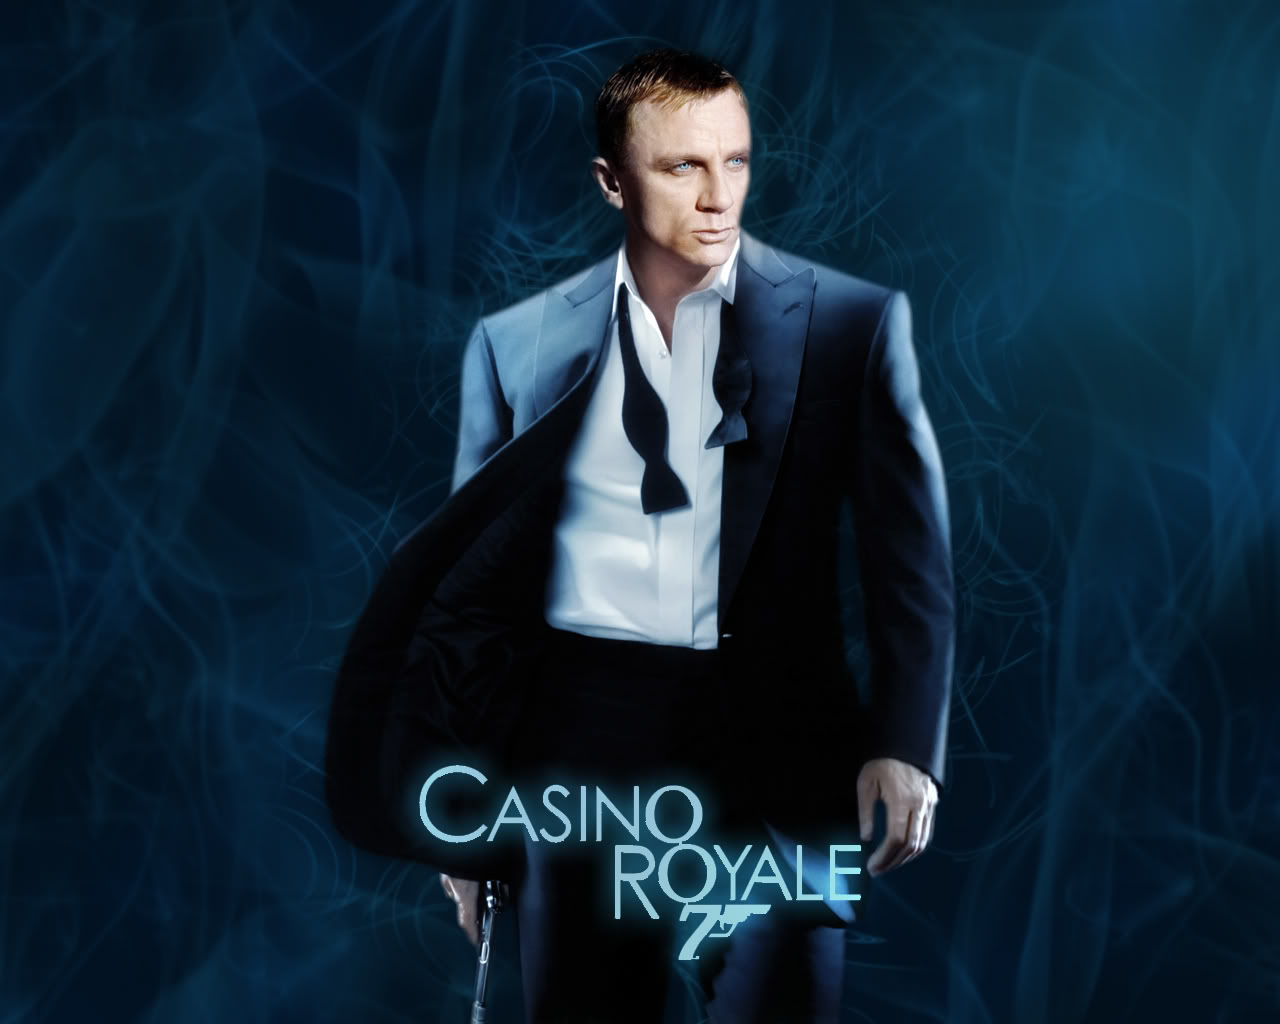 Casino Royale Wallpaper